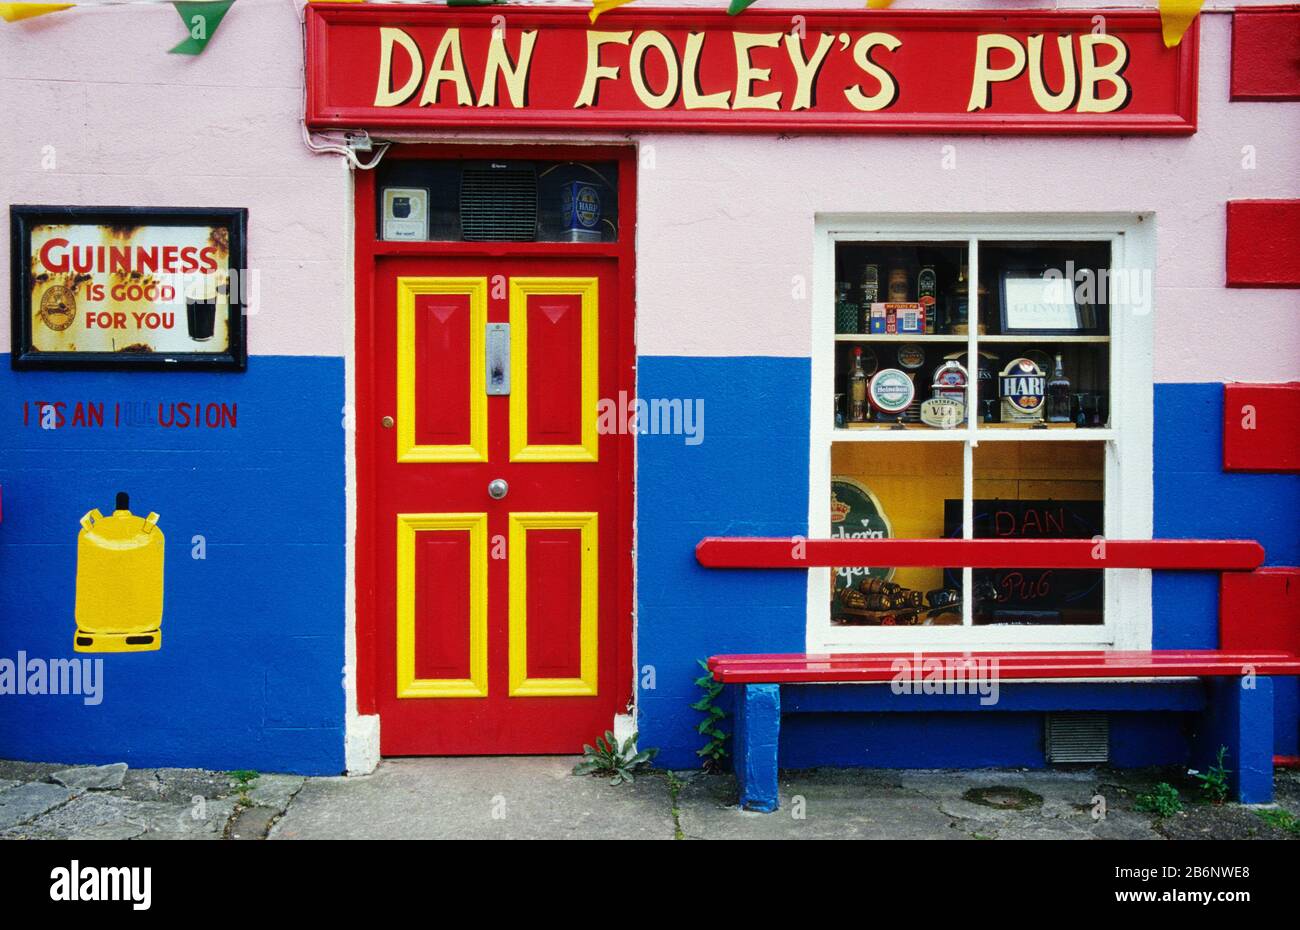 Pub En Irlanda, Dan Foleys Pub, Aussenansicht, Irland Foto de stock